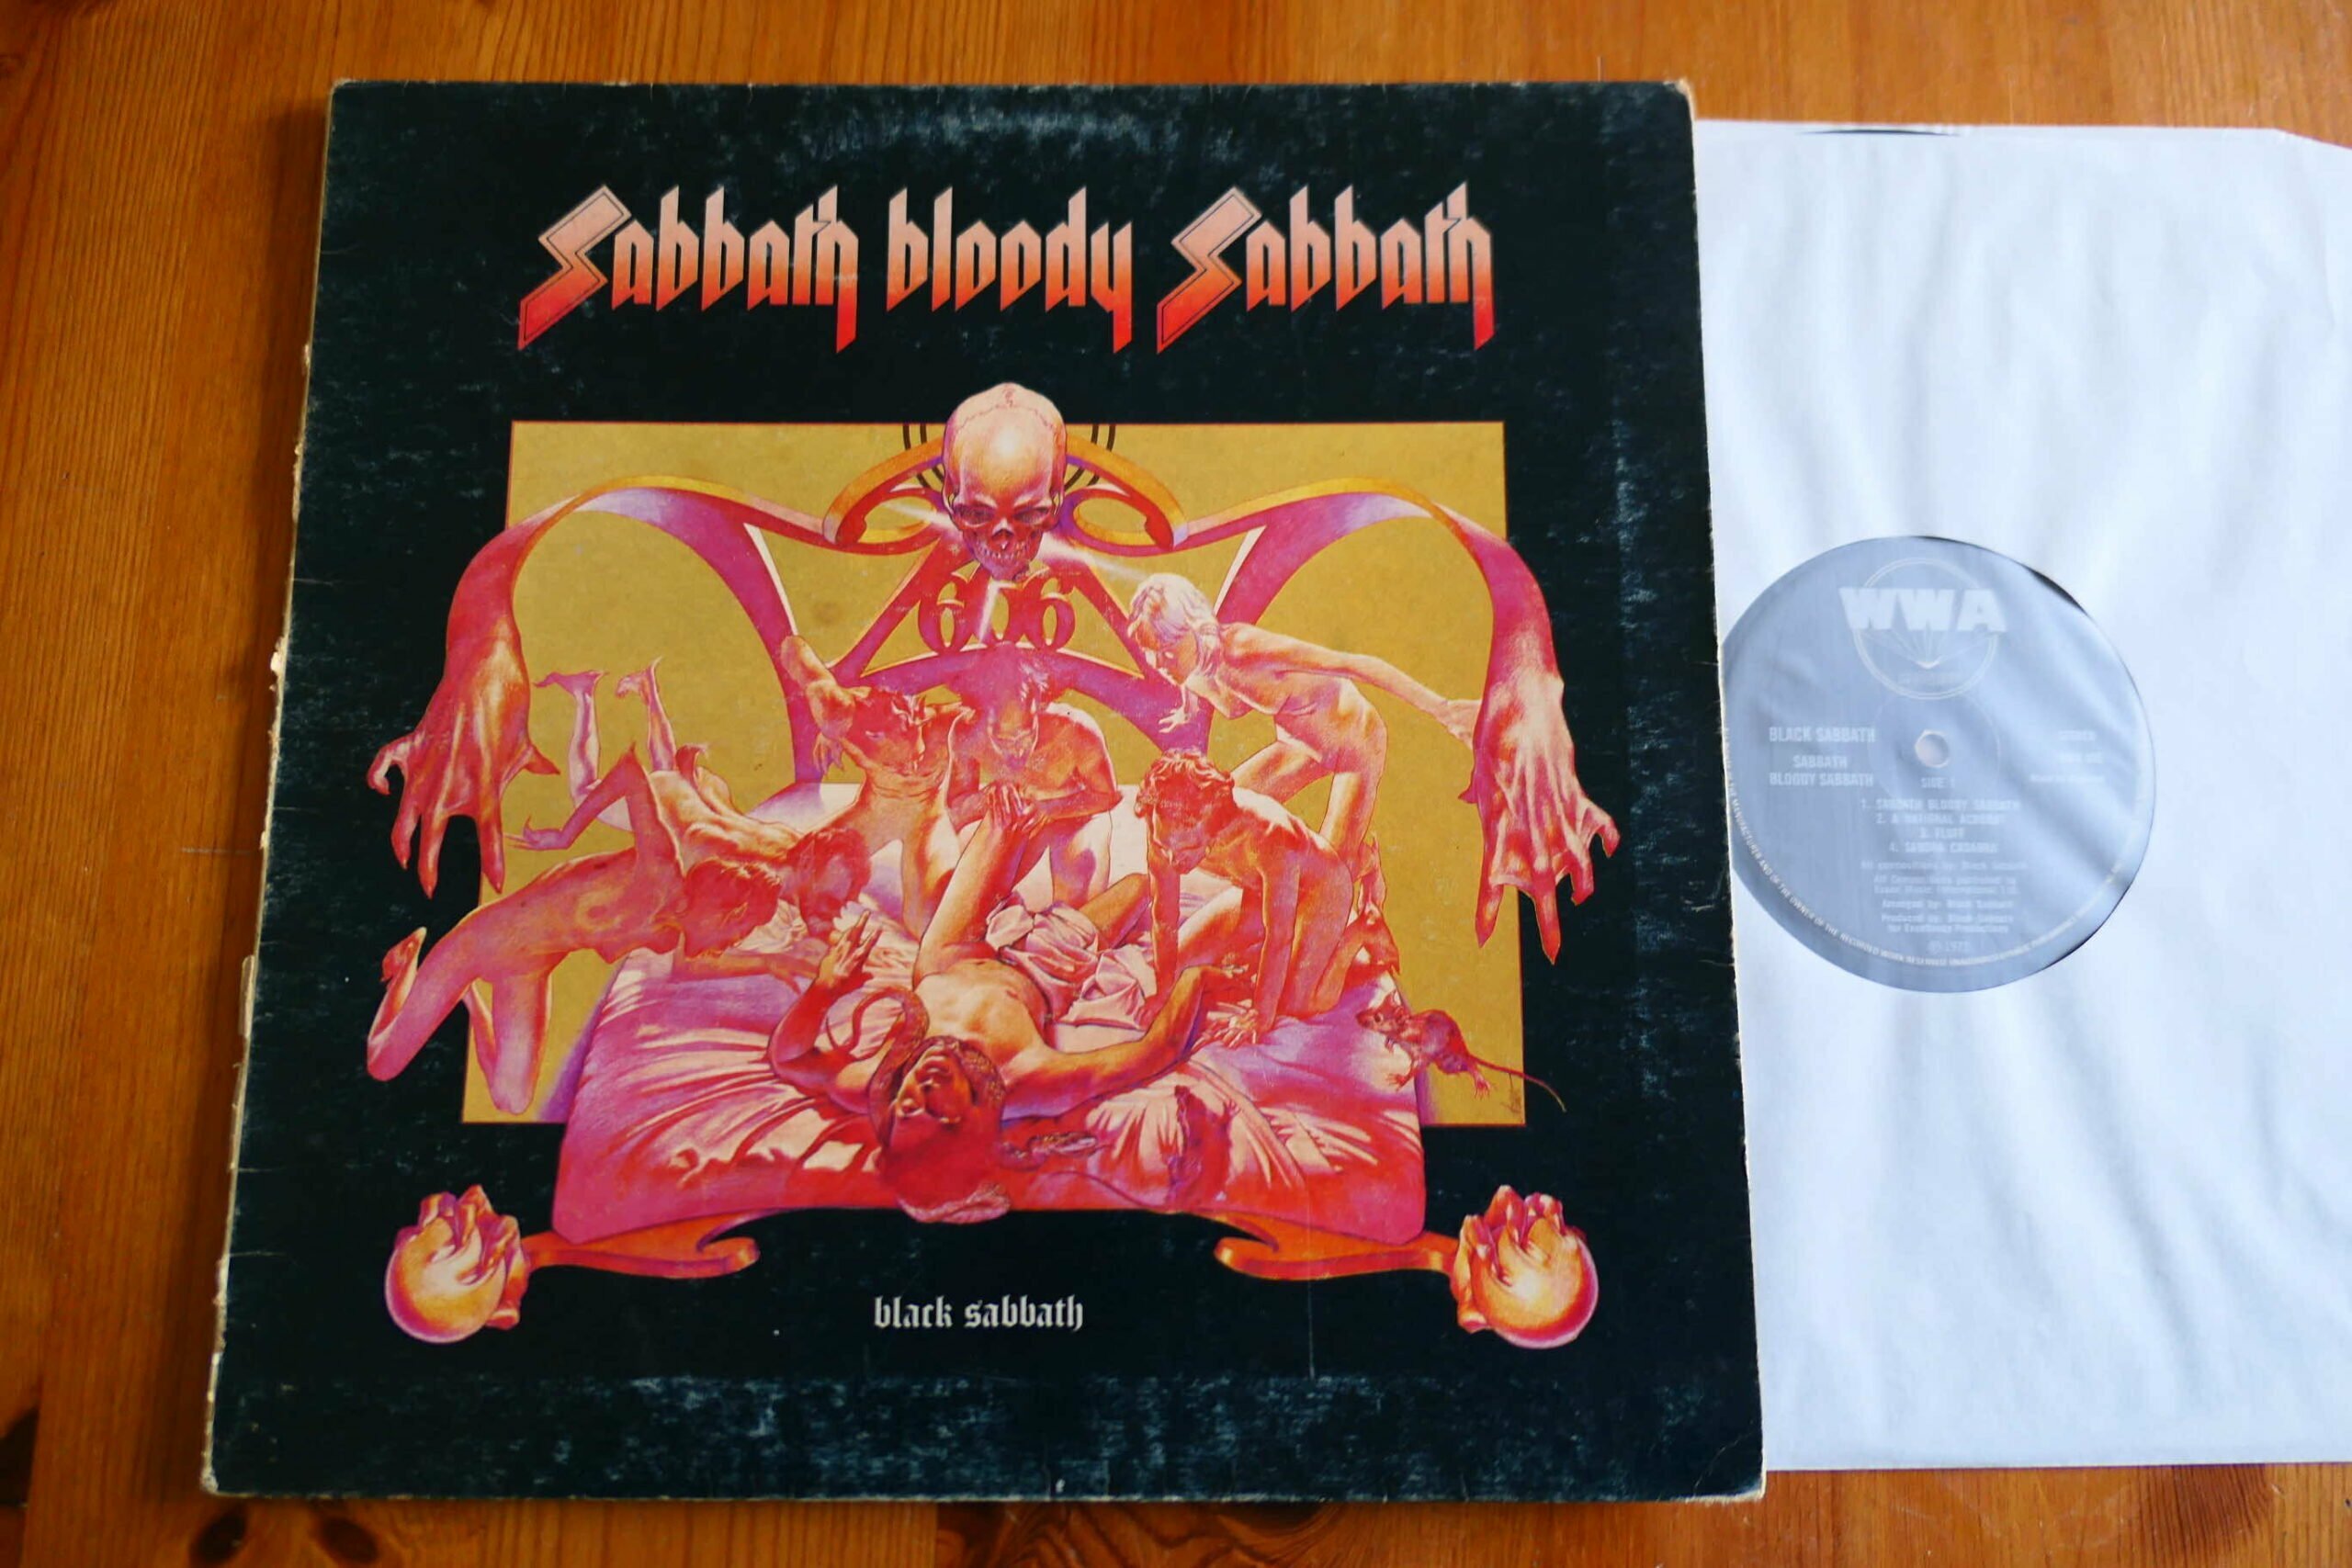 BLACK-SABBATH-SABBATH-BLOODY-SABBATH-LP-VINYL-RECORD-ALBUM